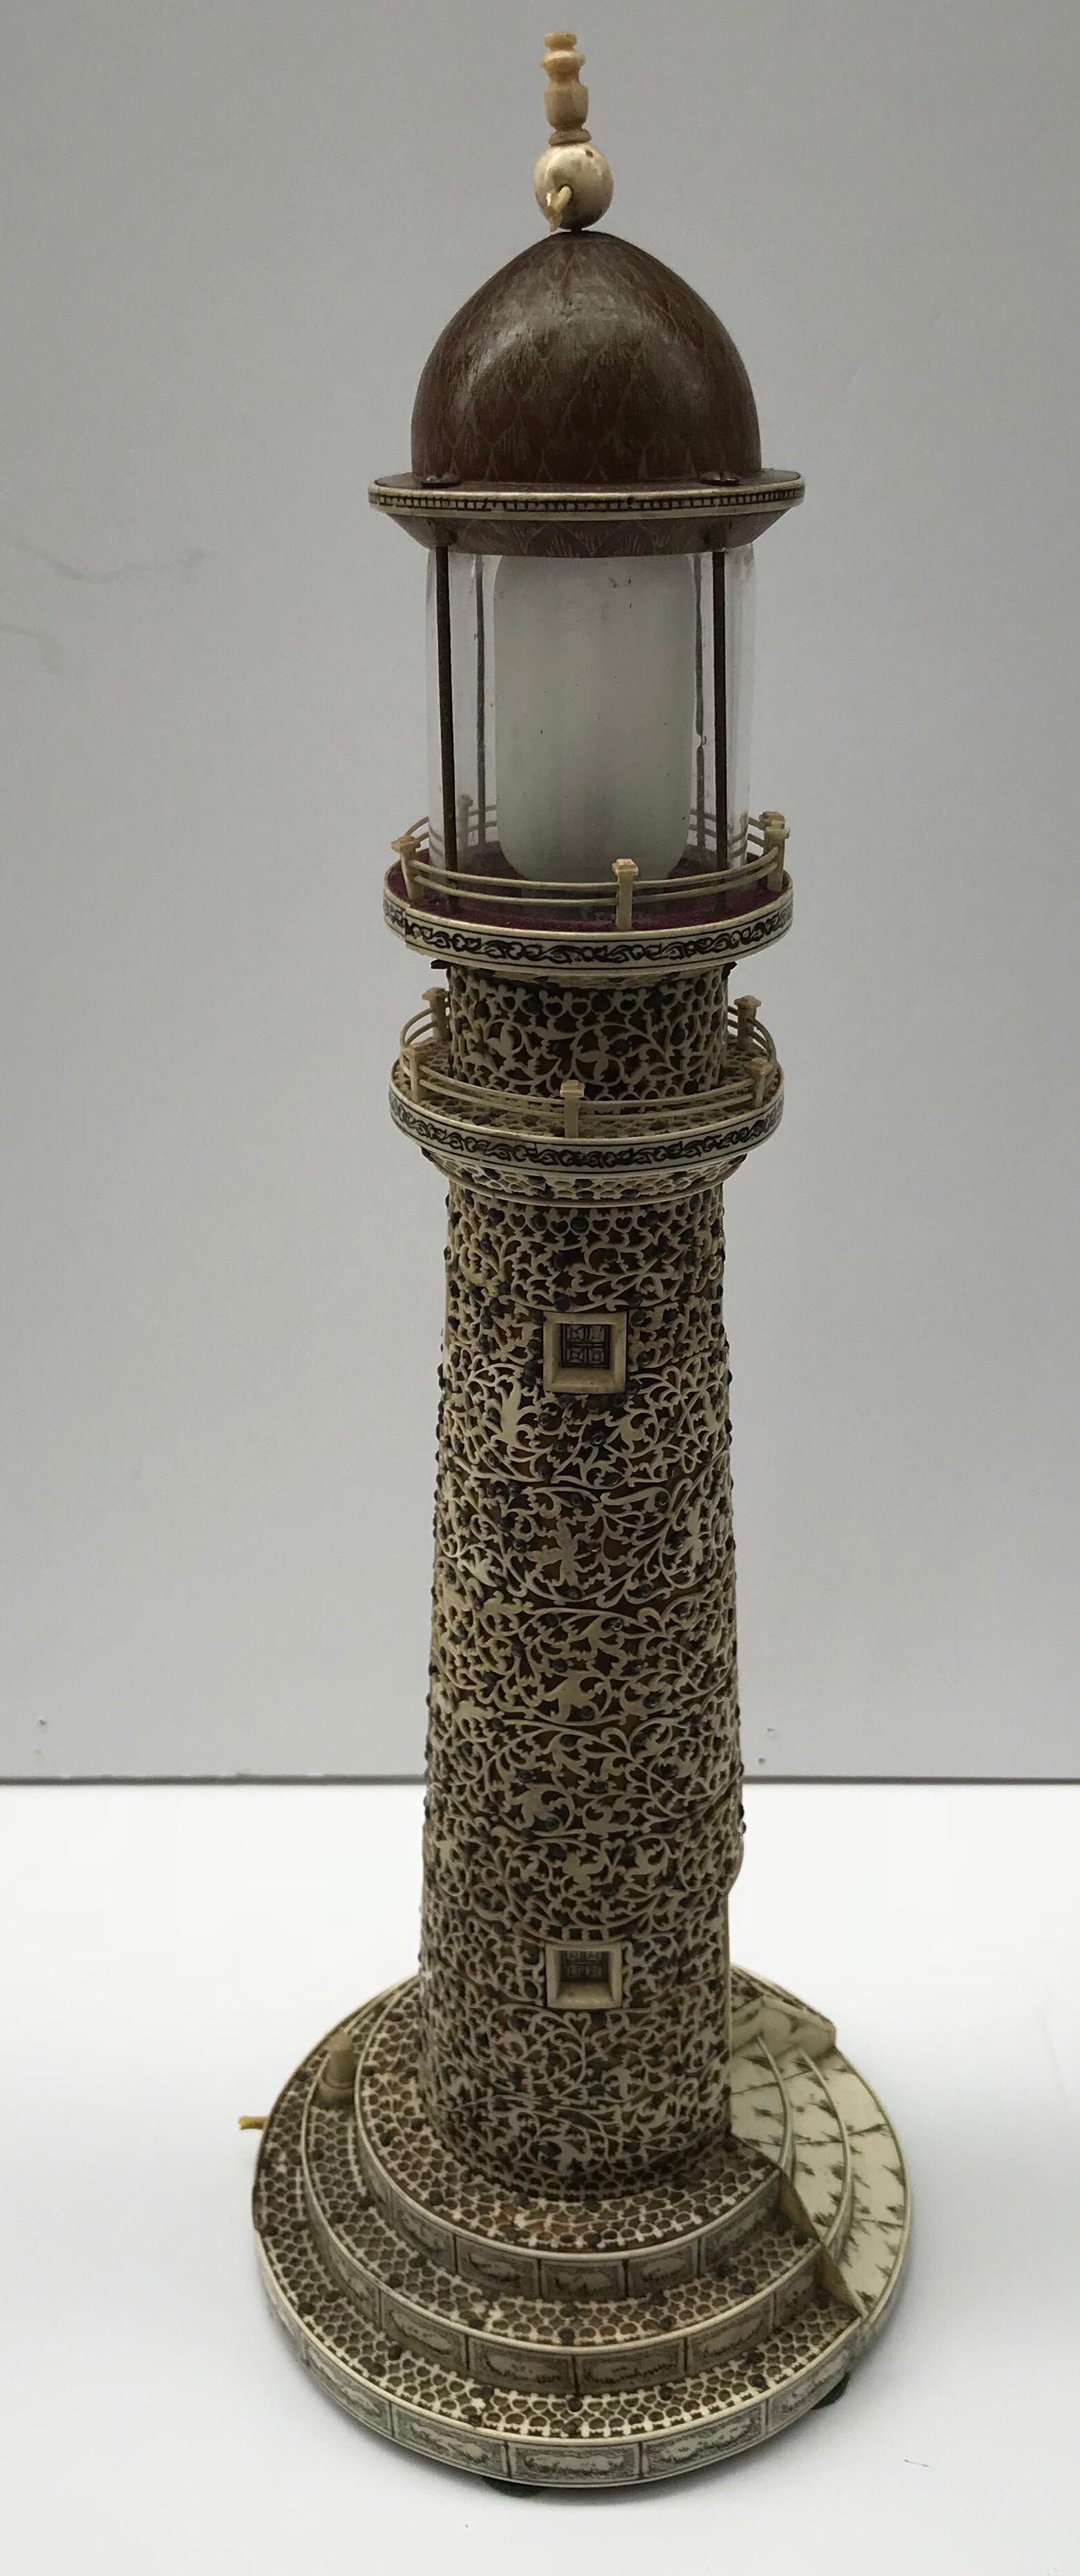 16th century lamp